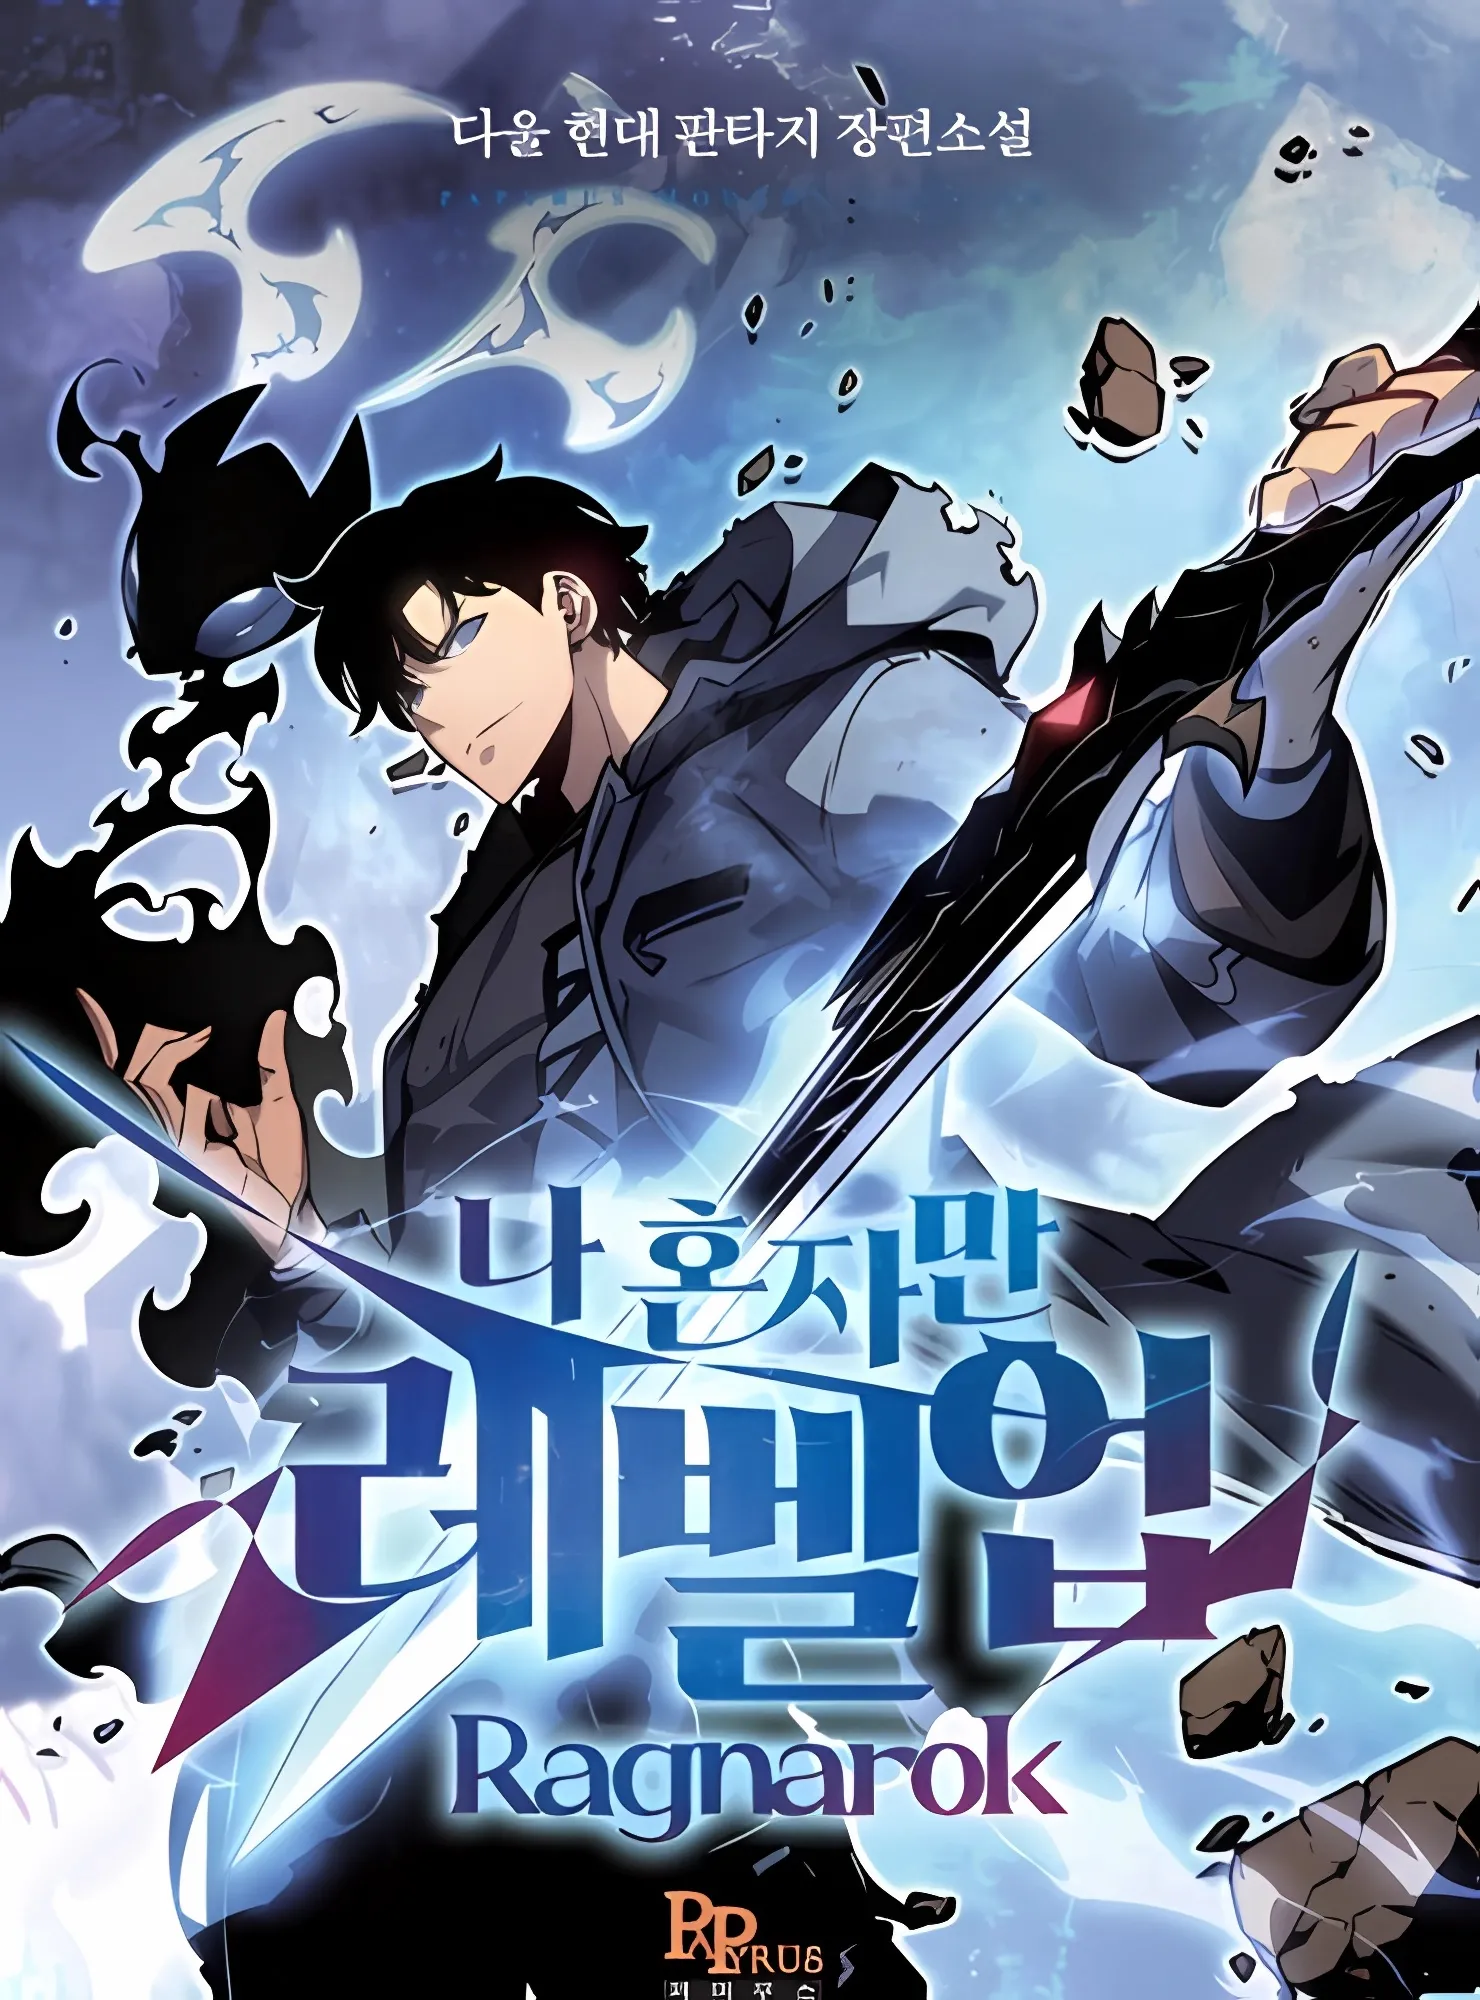 Read Solo Leveling Ragnarok Online Free All Chapters Asura Light Novel